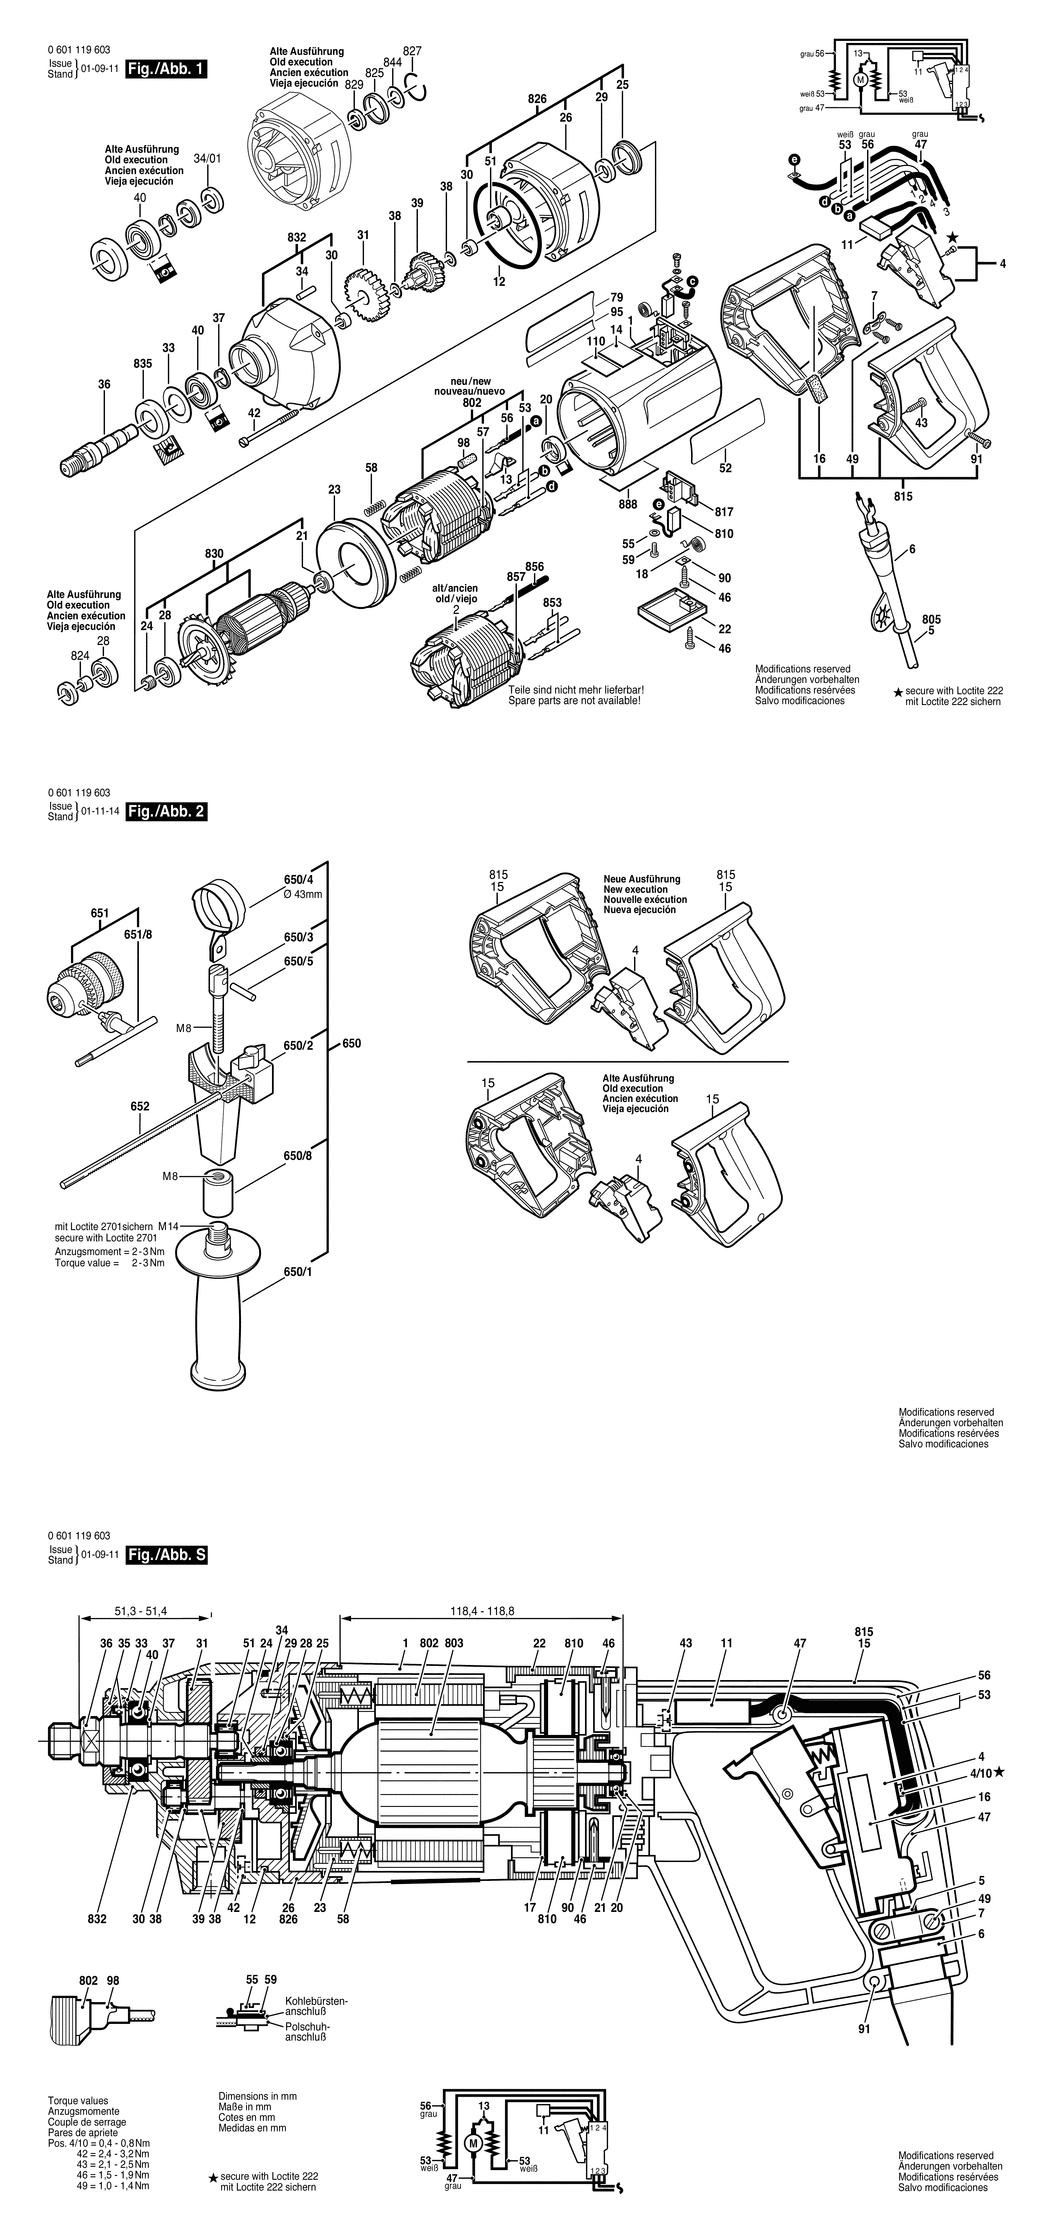 Bosch ---- / 0601119642 / GB 240 Volt Spare Parts